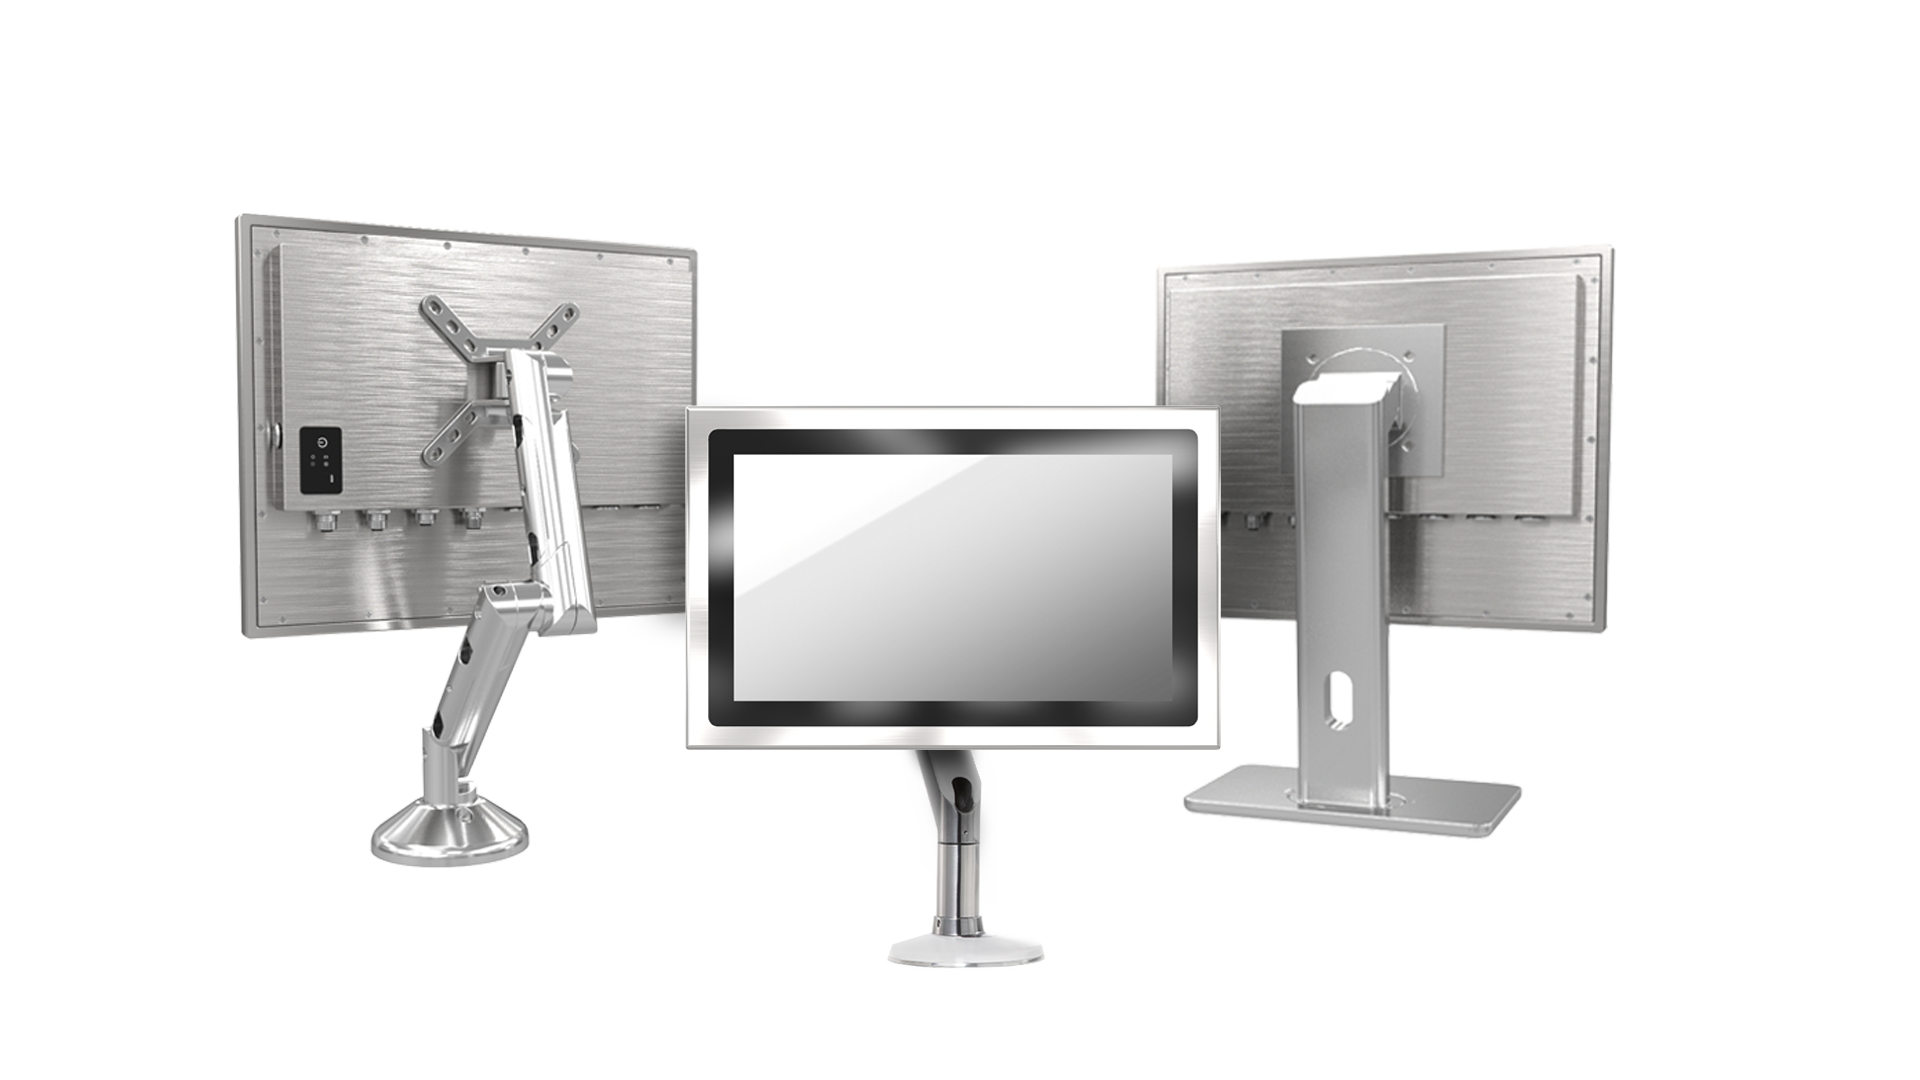 VESA-mount-industrial-panel-pc-mount-wall-frame-mount